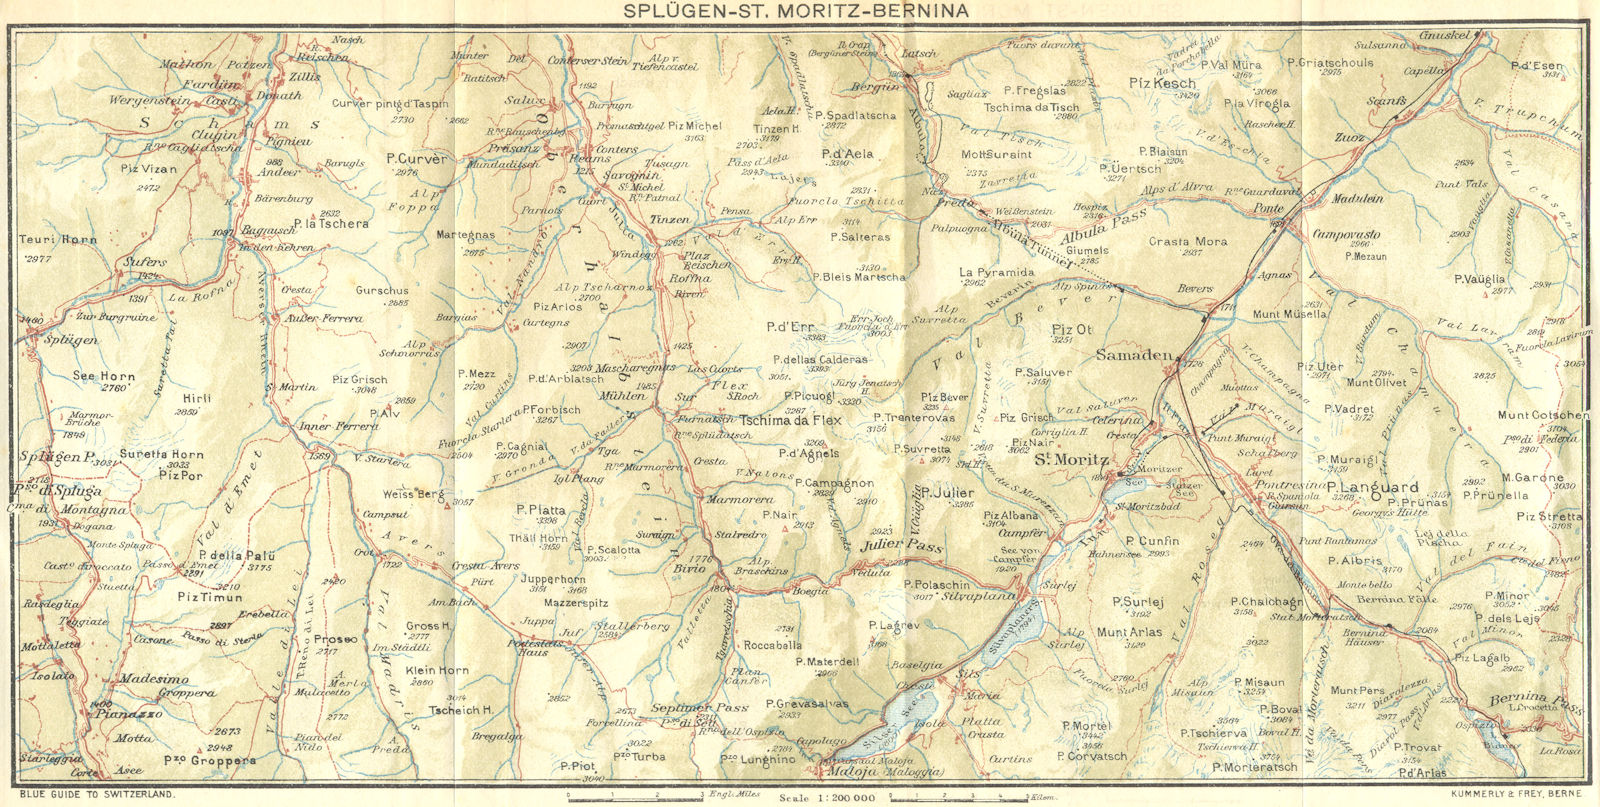 SWITZERLAND. Splugen-St Moritz-Bernina 1923 old antique vintage map plan chart